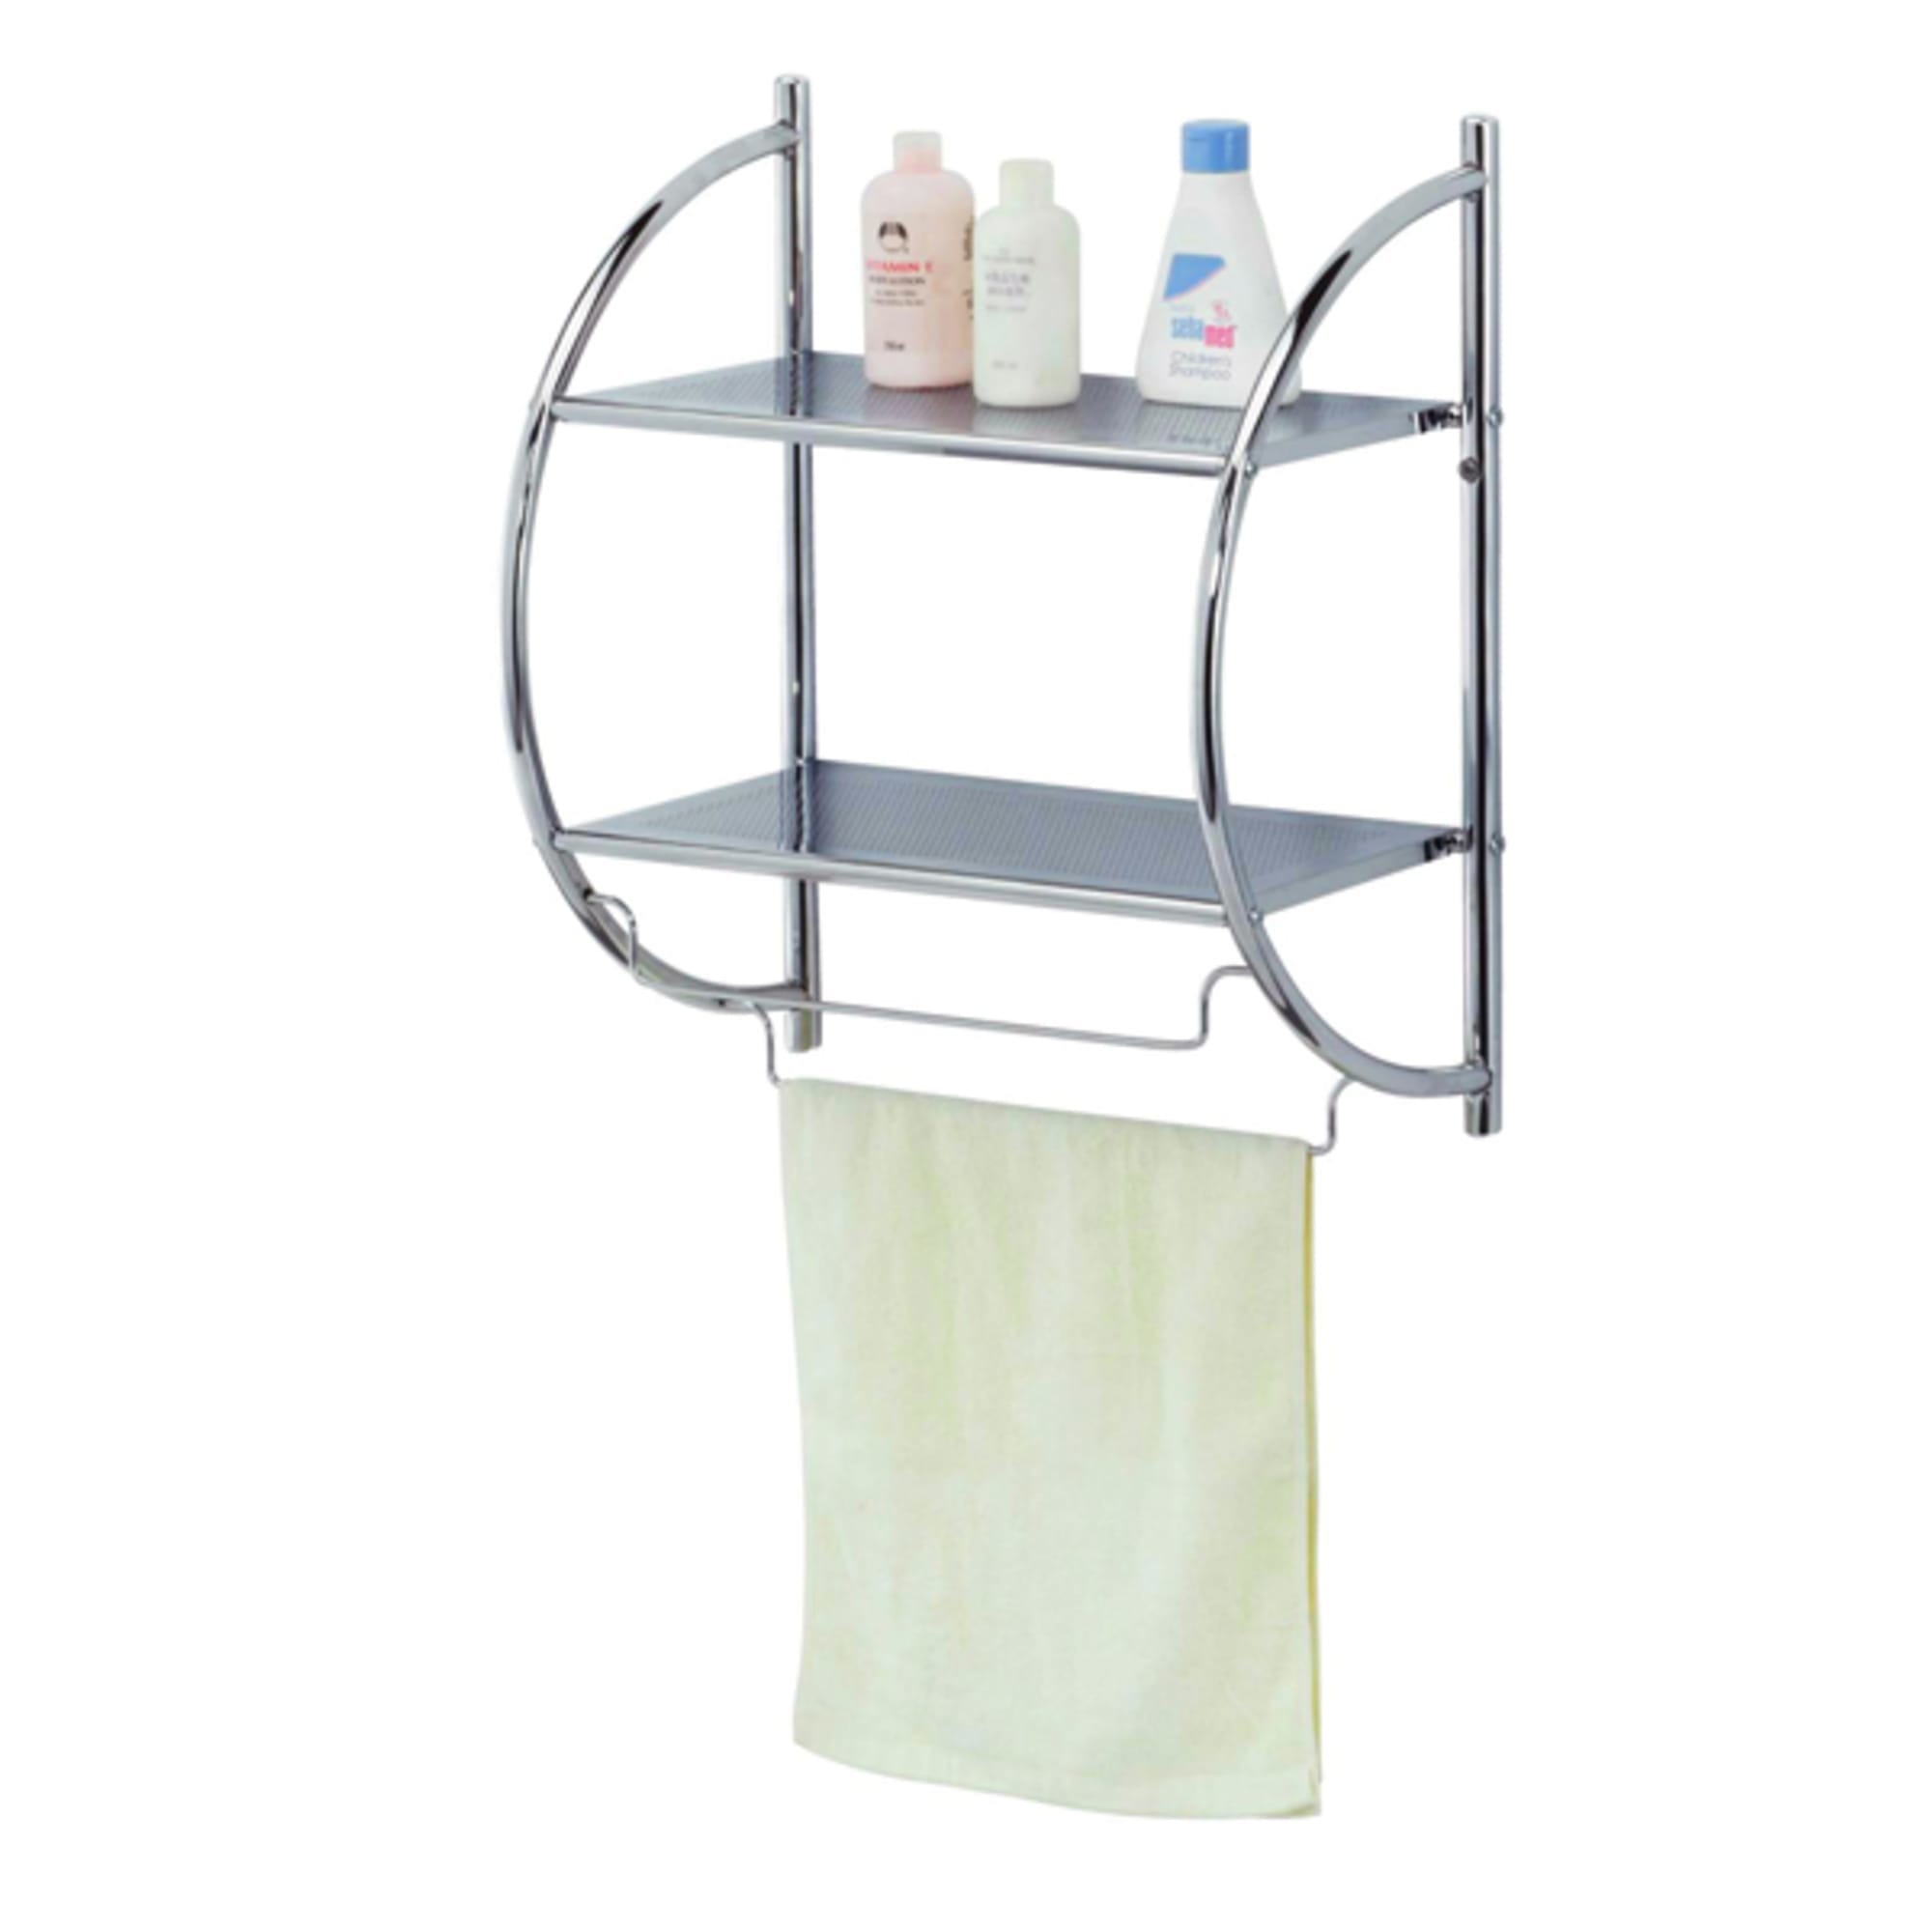 Details about   Bathroom Shelf with Towel Bar Wall Mounted 2-Tier Kitchen Shelf Organizer Rack 